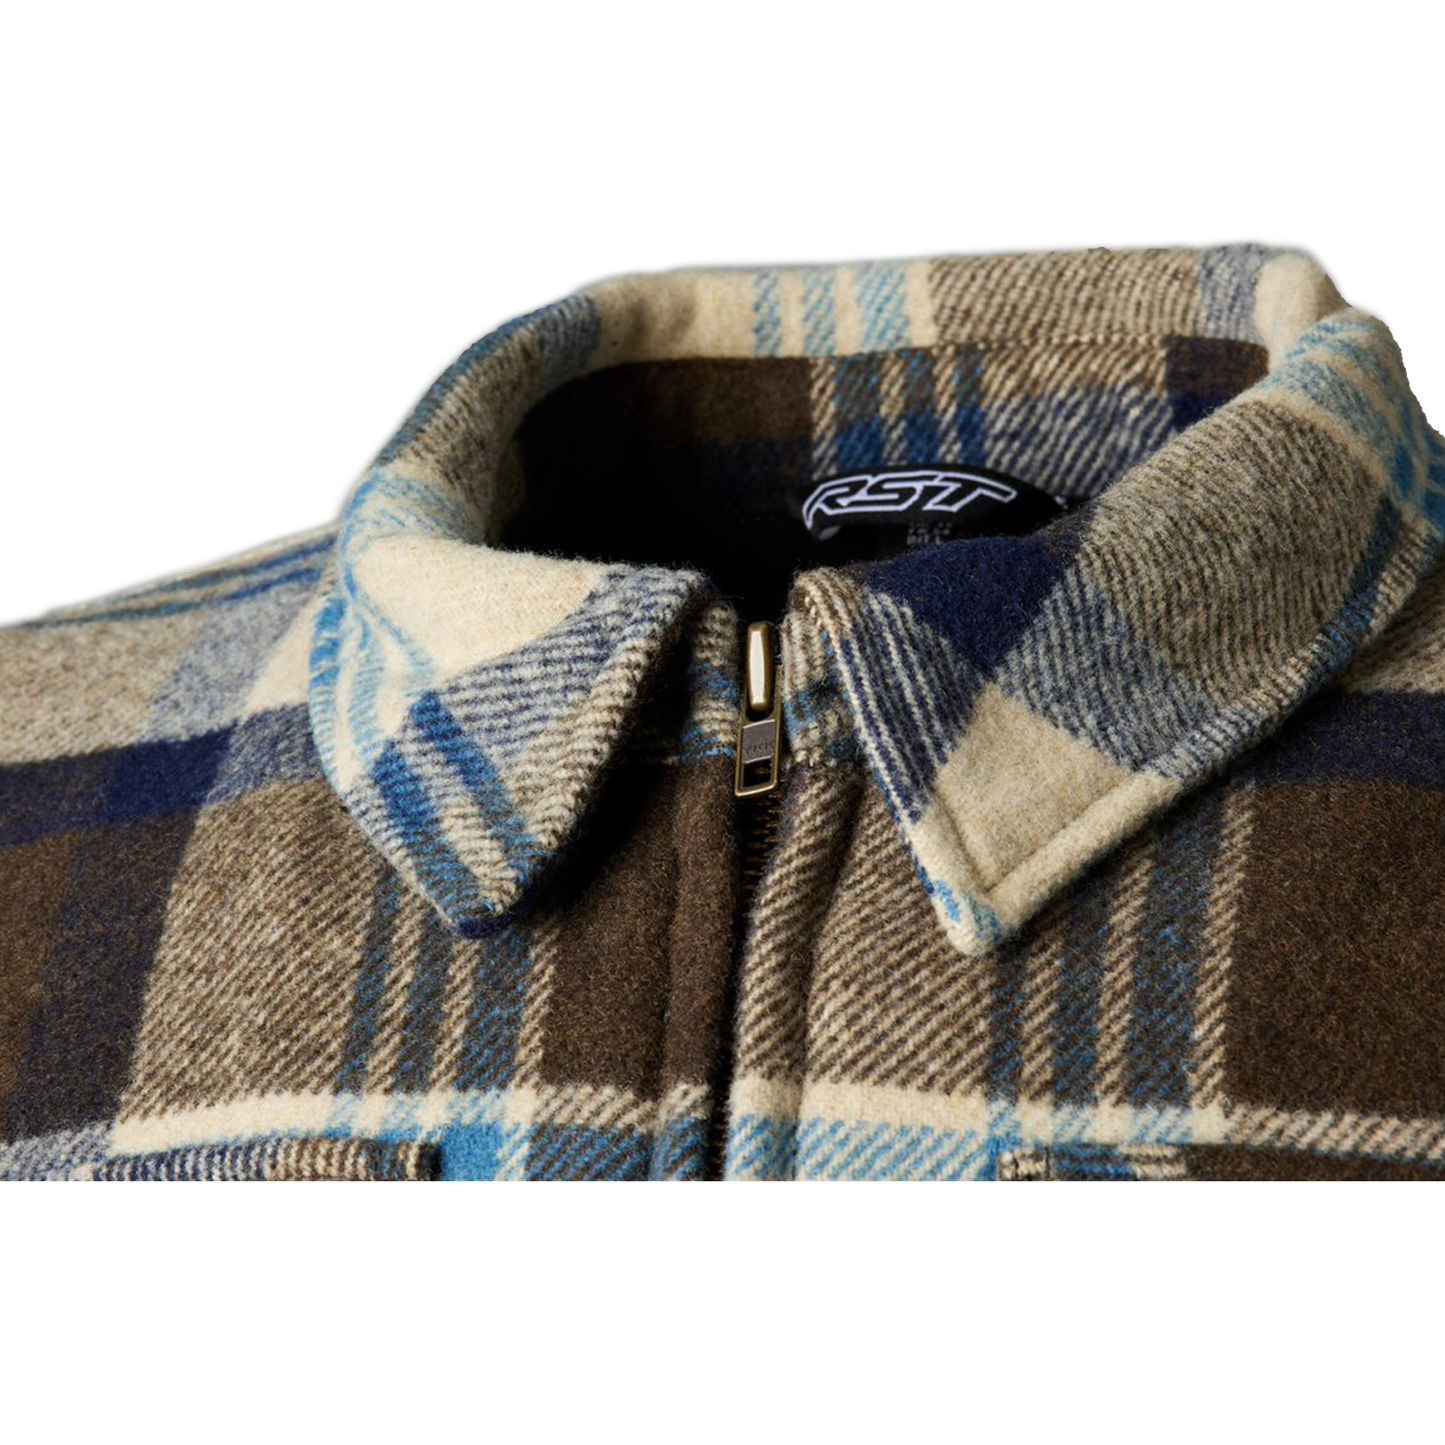 RST Brushed Men's Textile Shirt - Brown/Blue Check